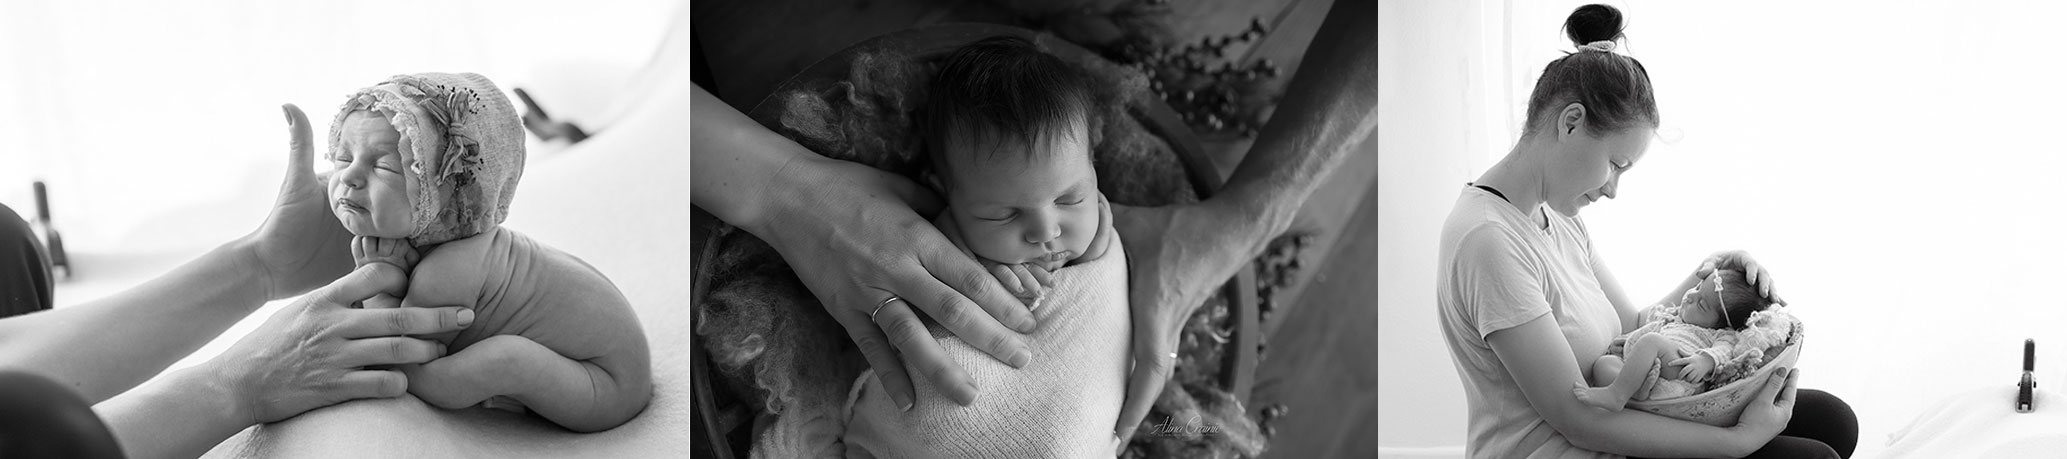 Mentoring Newborn by Alina Crainic